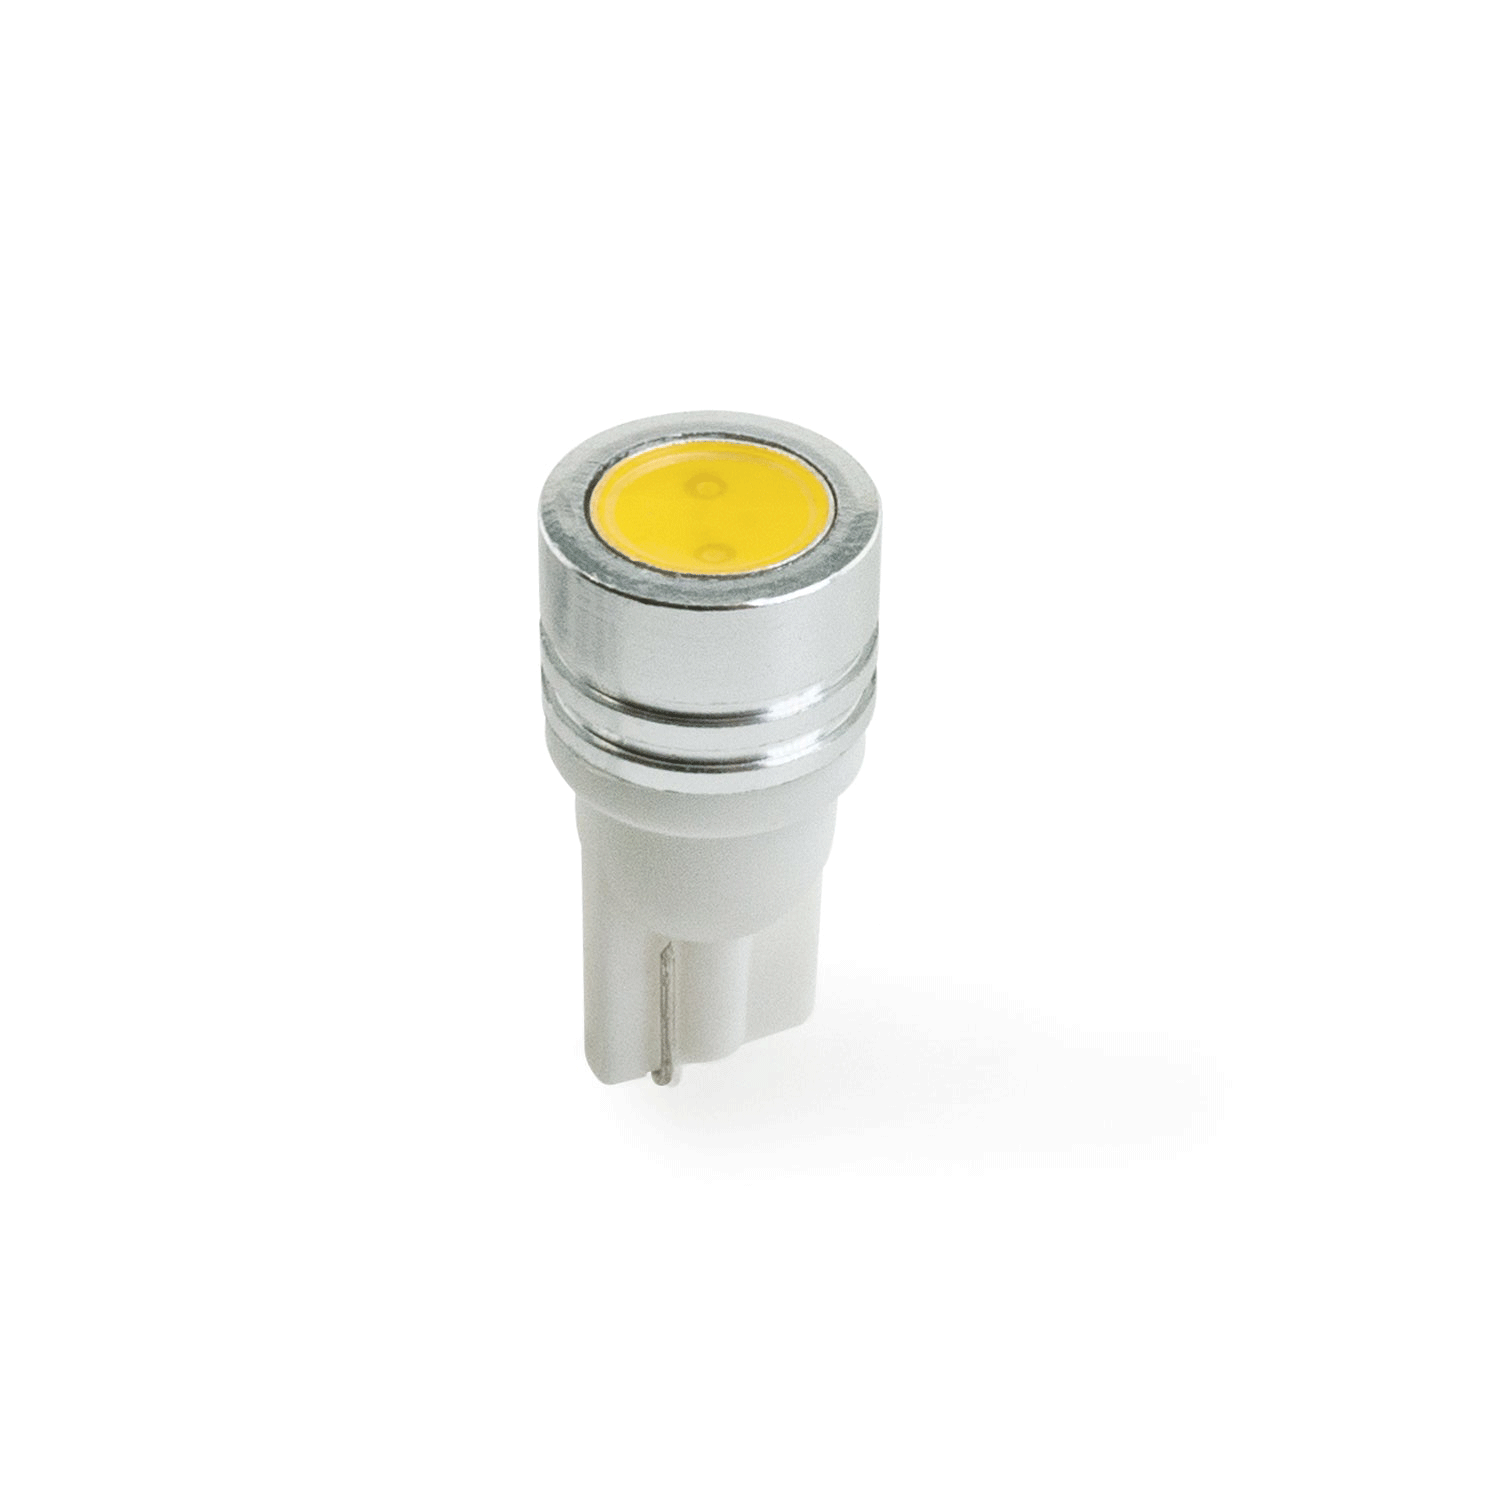 T10, W5W, LED COB 1W - Yellow, 80lm